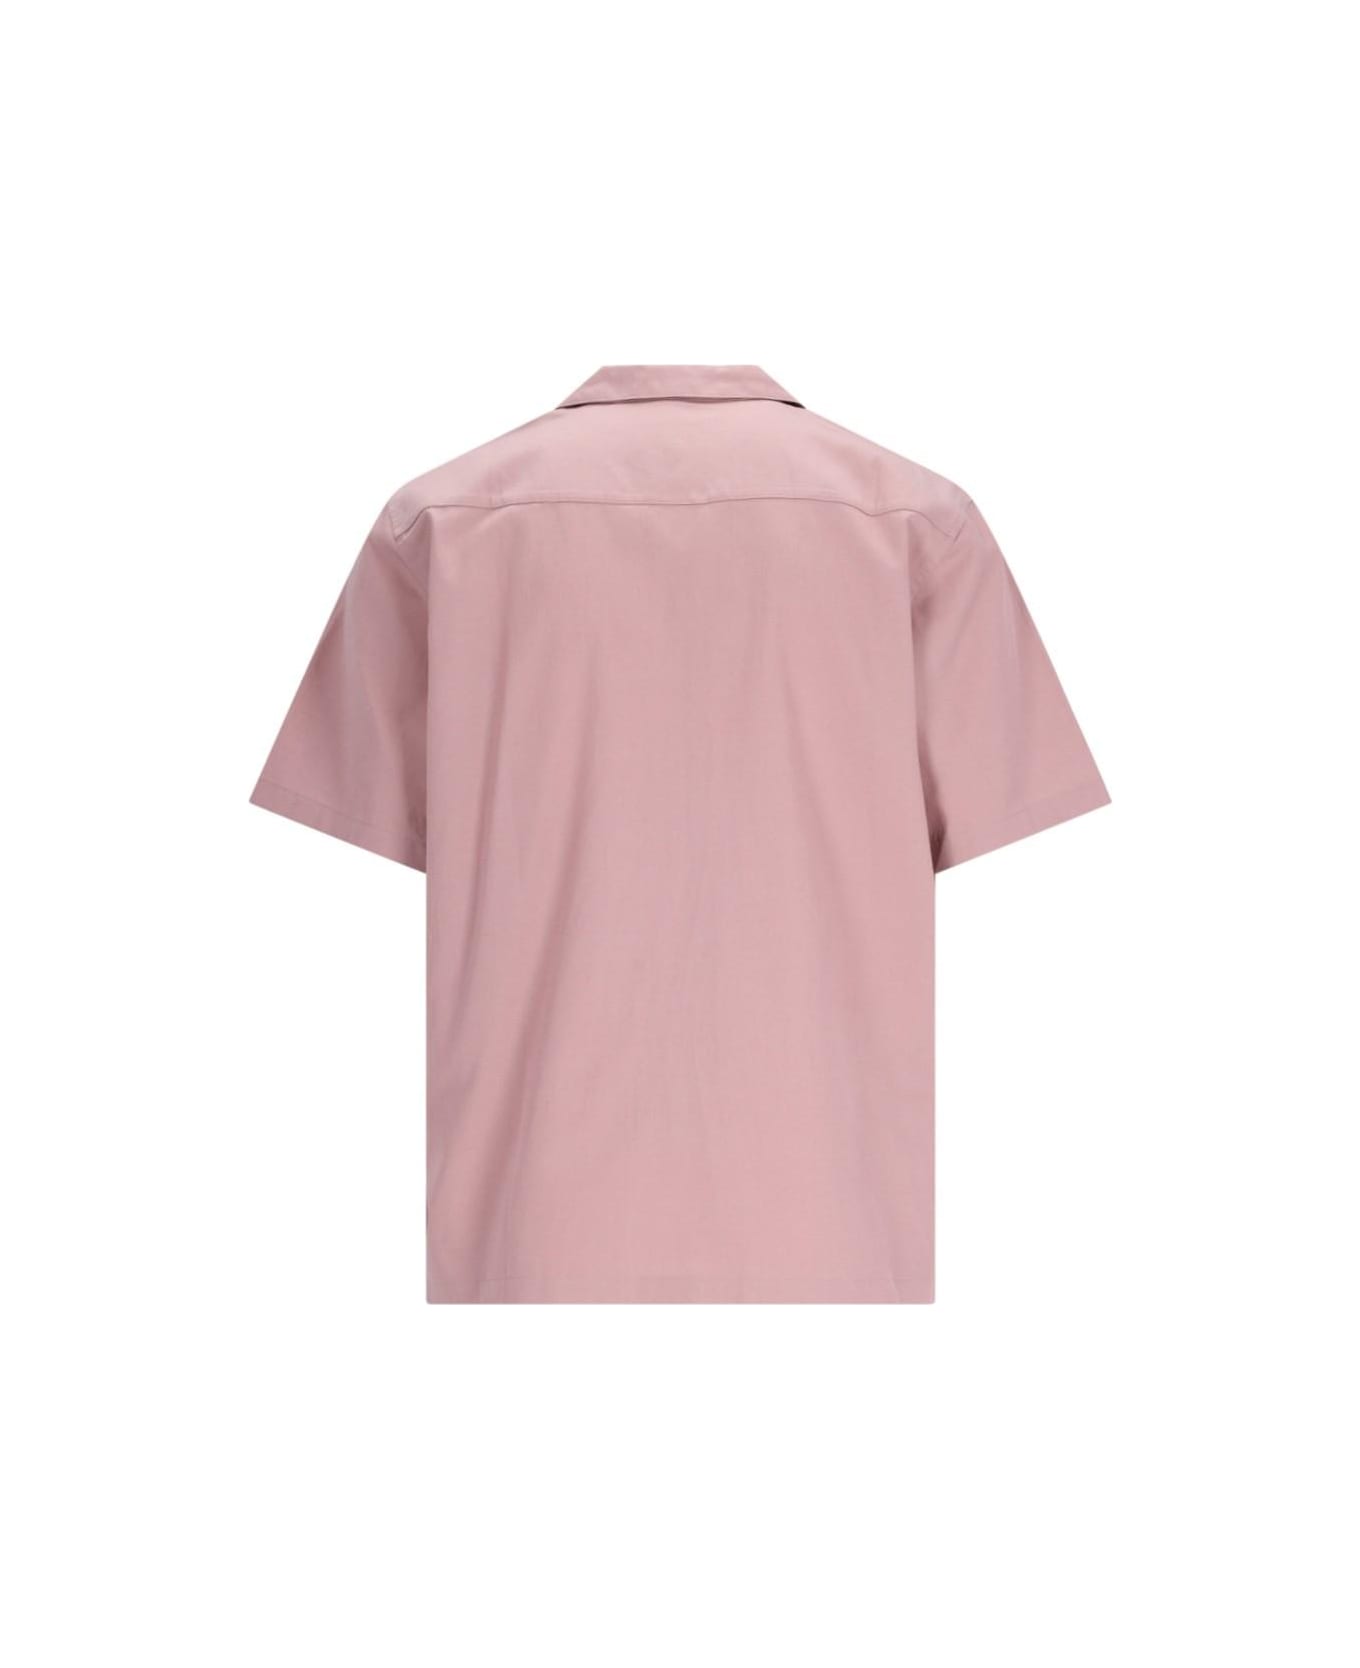 Carhartt WIP 'delray' Shirt - Pink シャツ